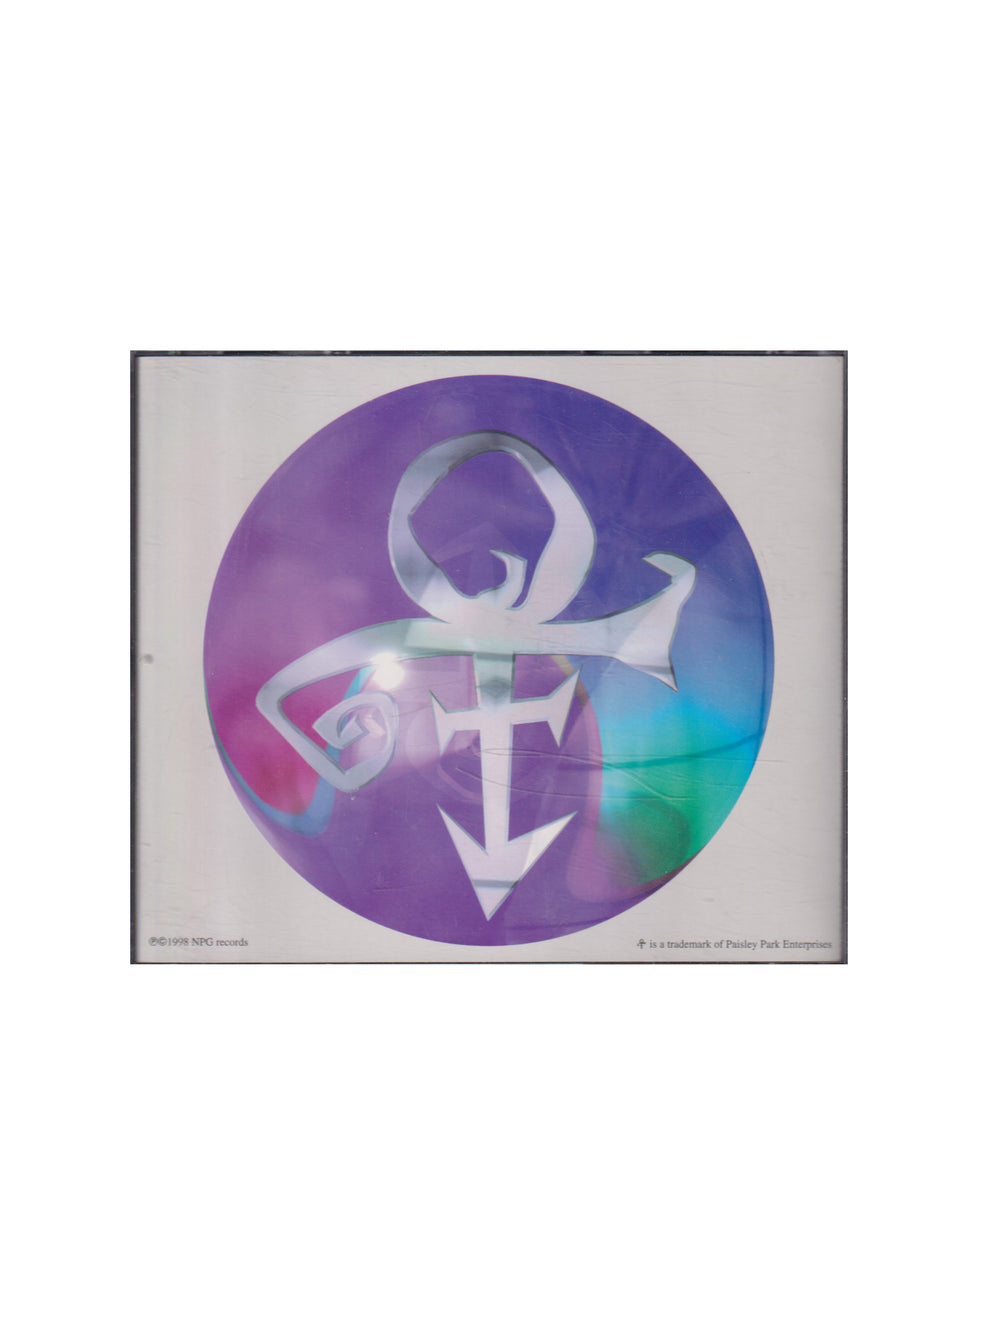 Prince – 0(+> Crystal Ball 3 x CD Album Truth 1 x CD UK Europe Preloved: 1998